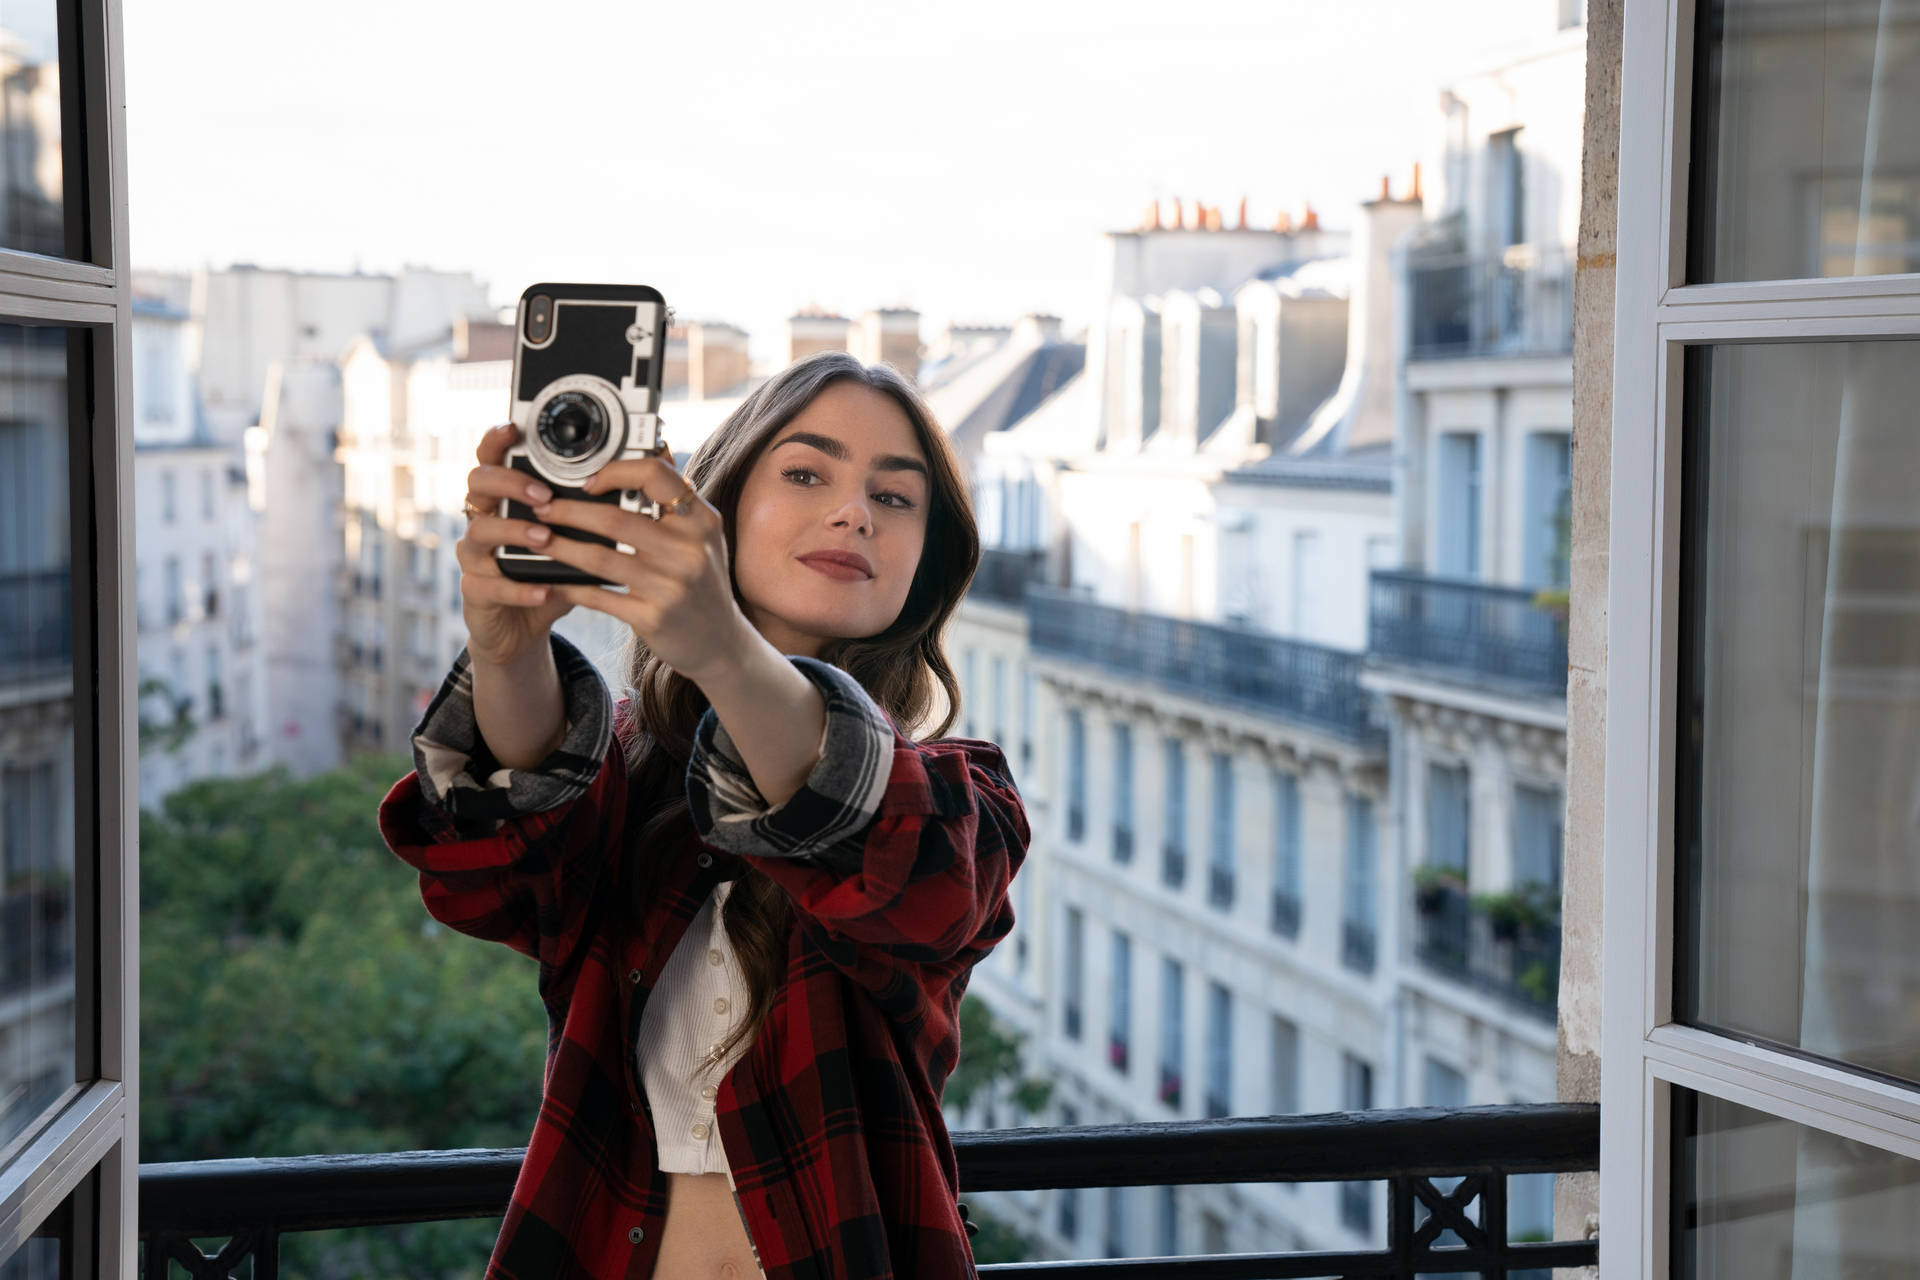 Emilyi Paris Fångande Sina Semesterminnen I En Selfie. Wallpaper